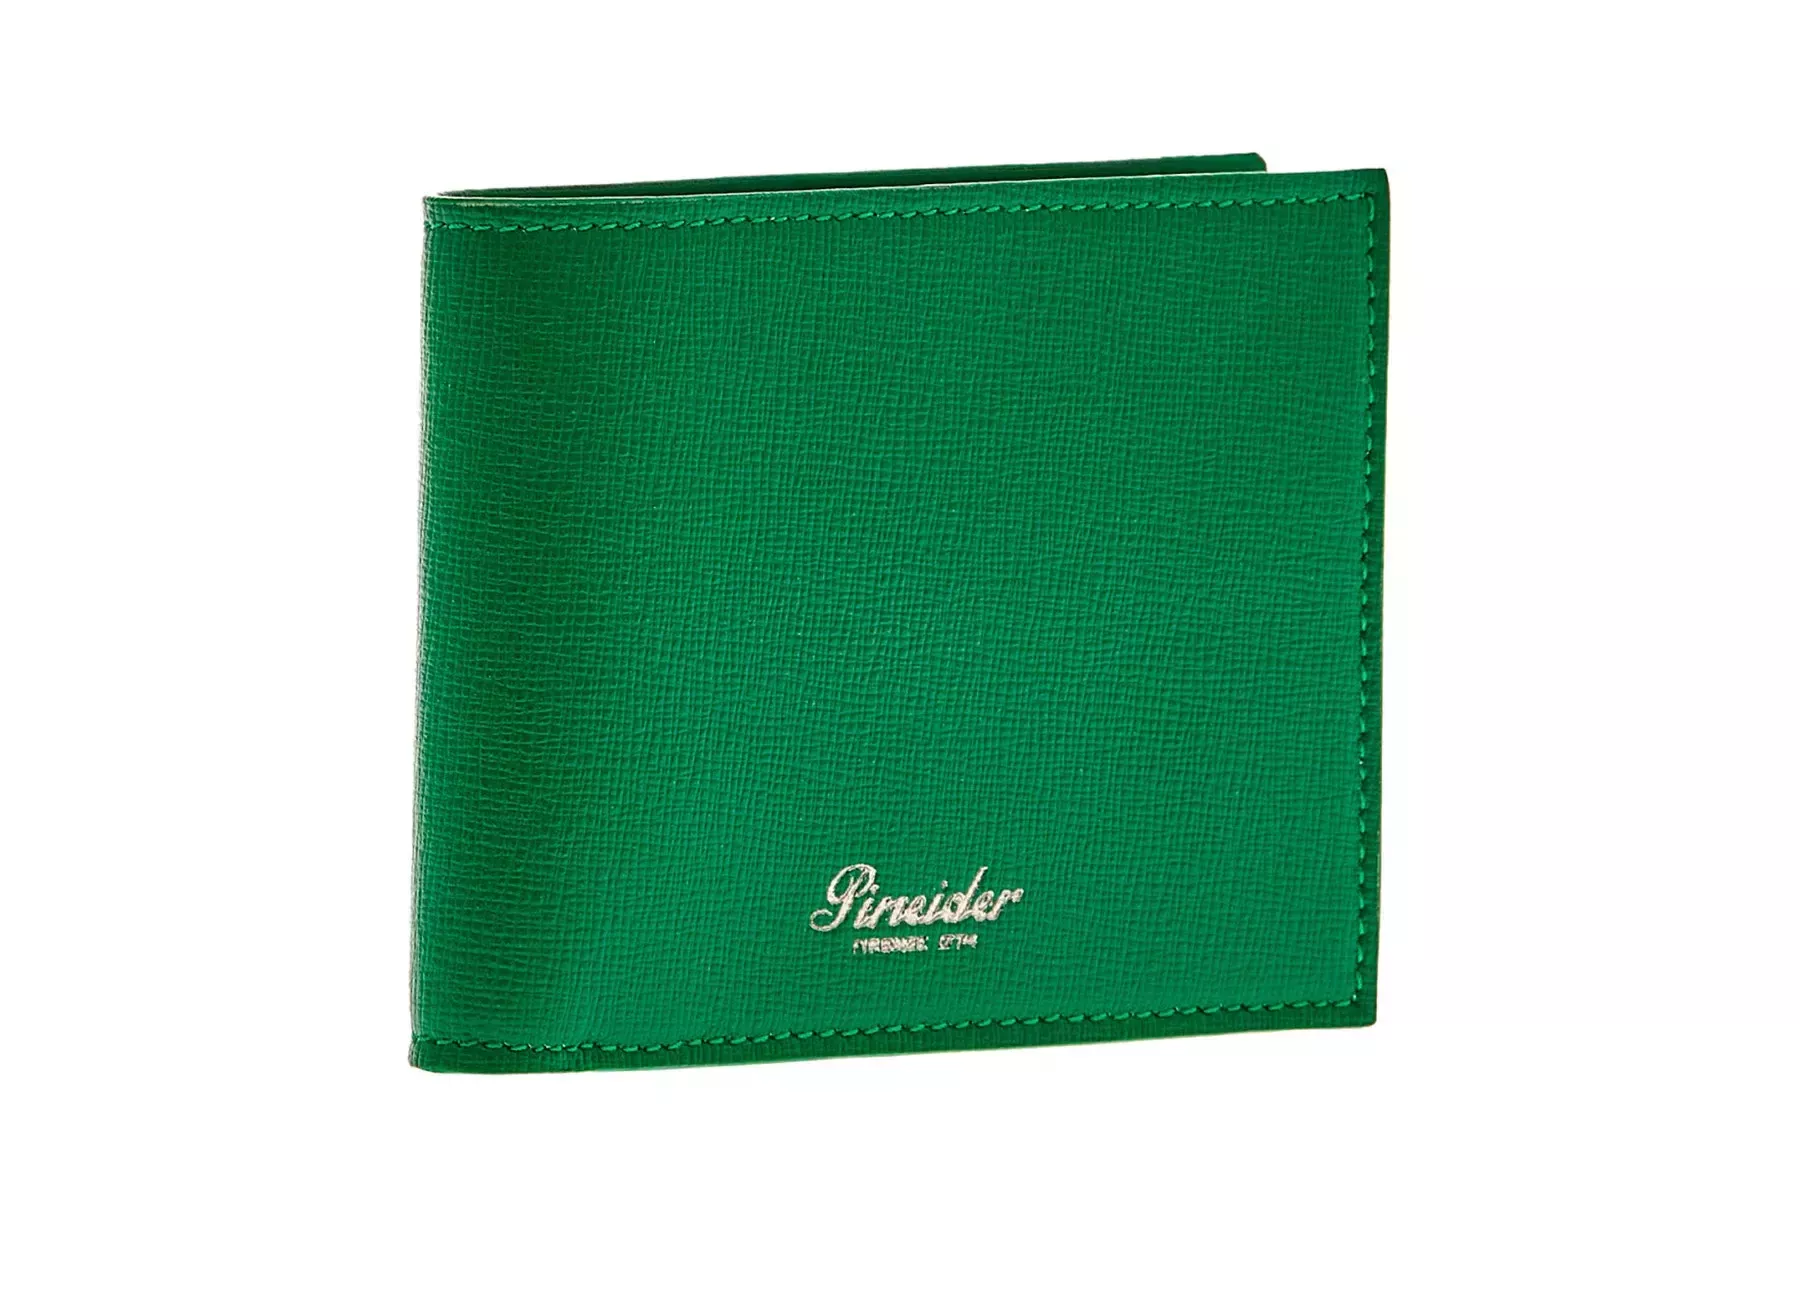 Bi-fold Wallet 6 CC 720 Collection